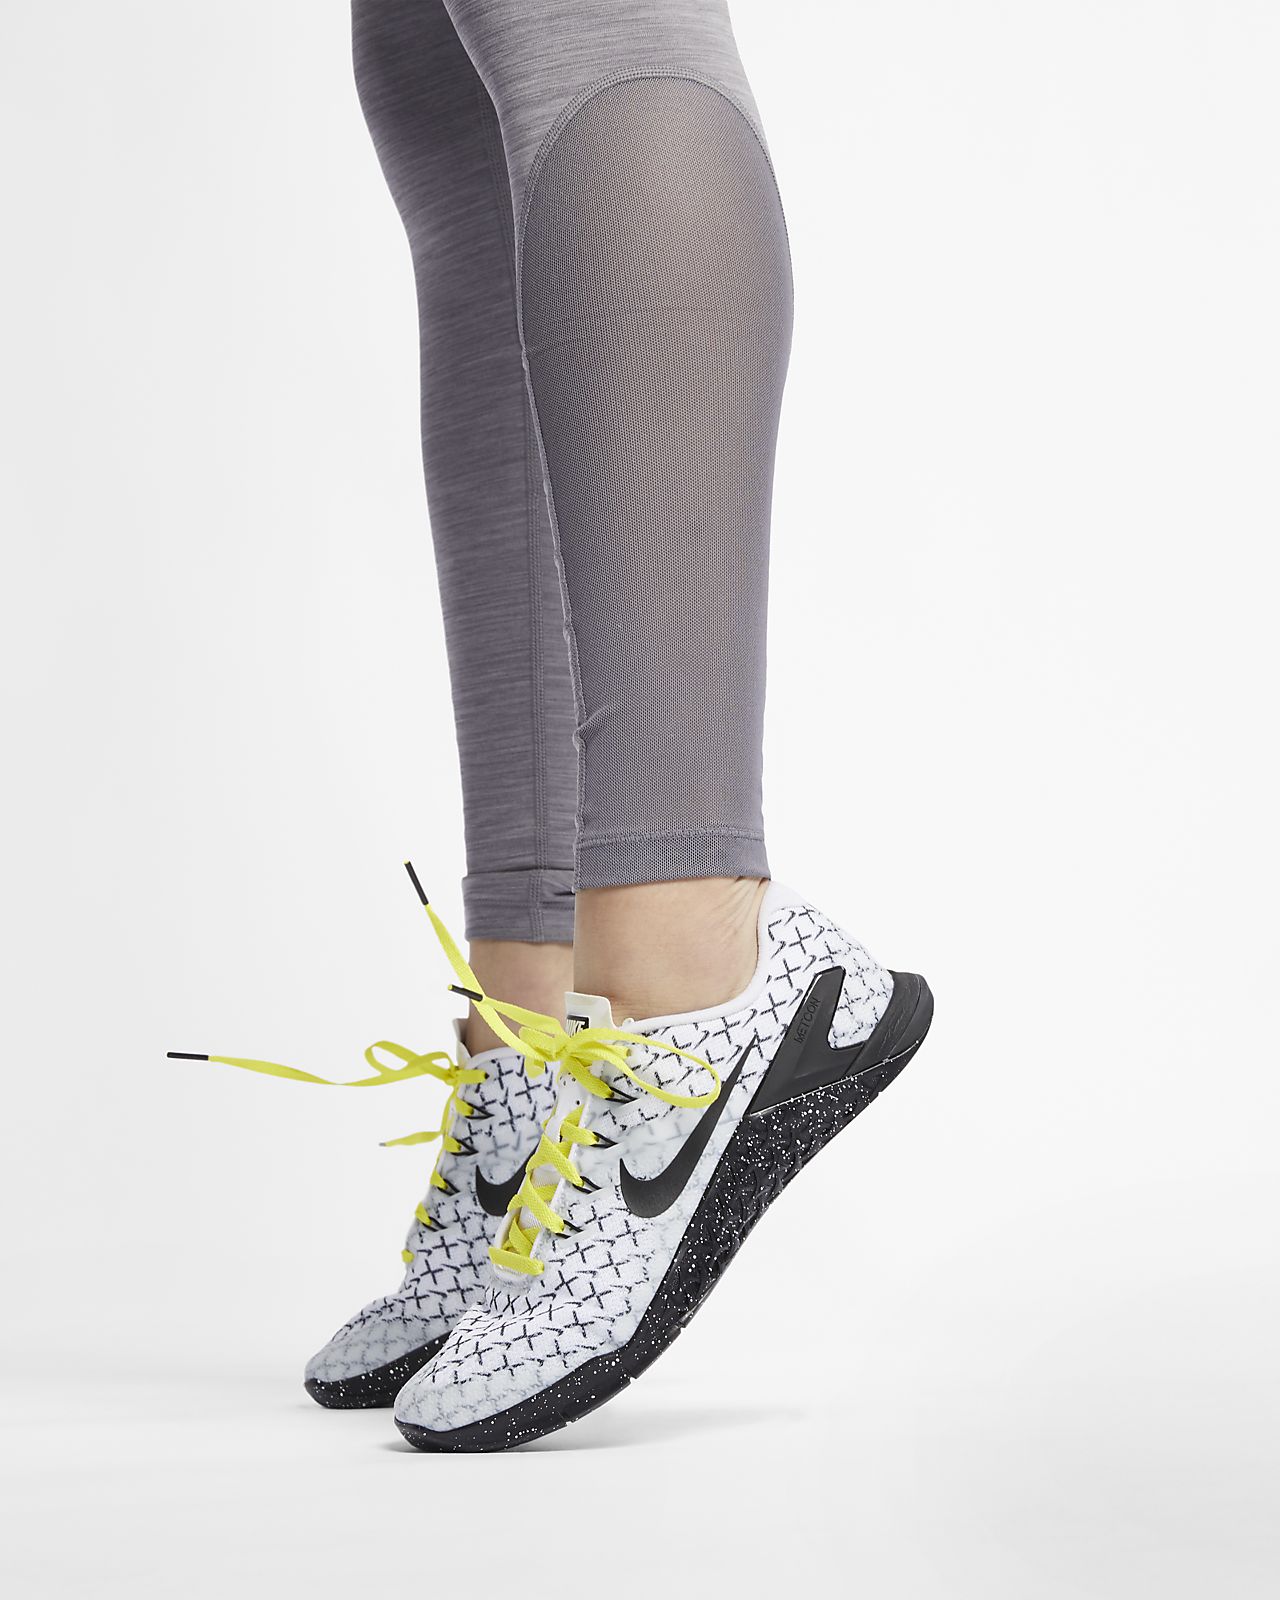 Nike Women's Pro Compression Training Tights Black/White Size Small  AO9968-010 